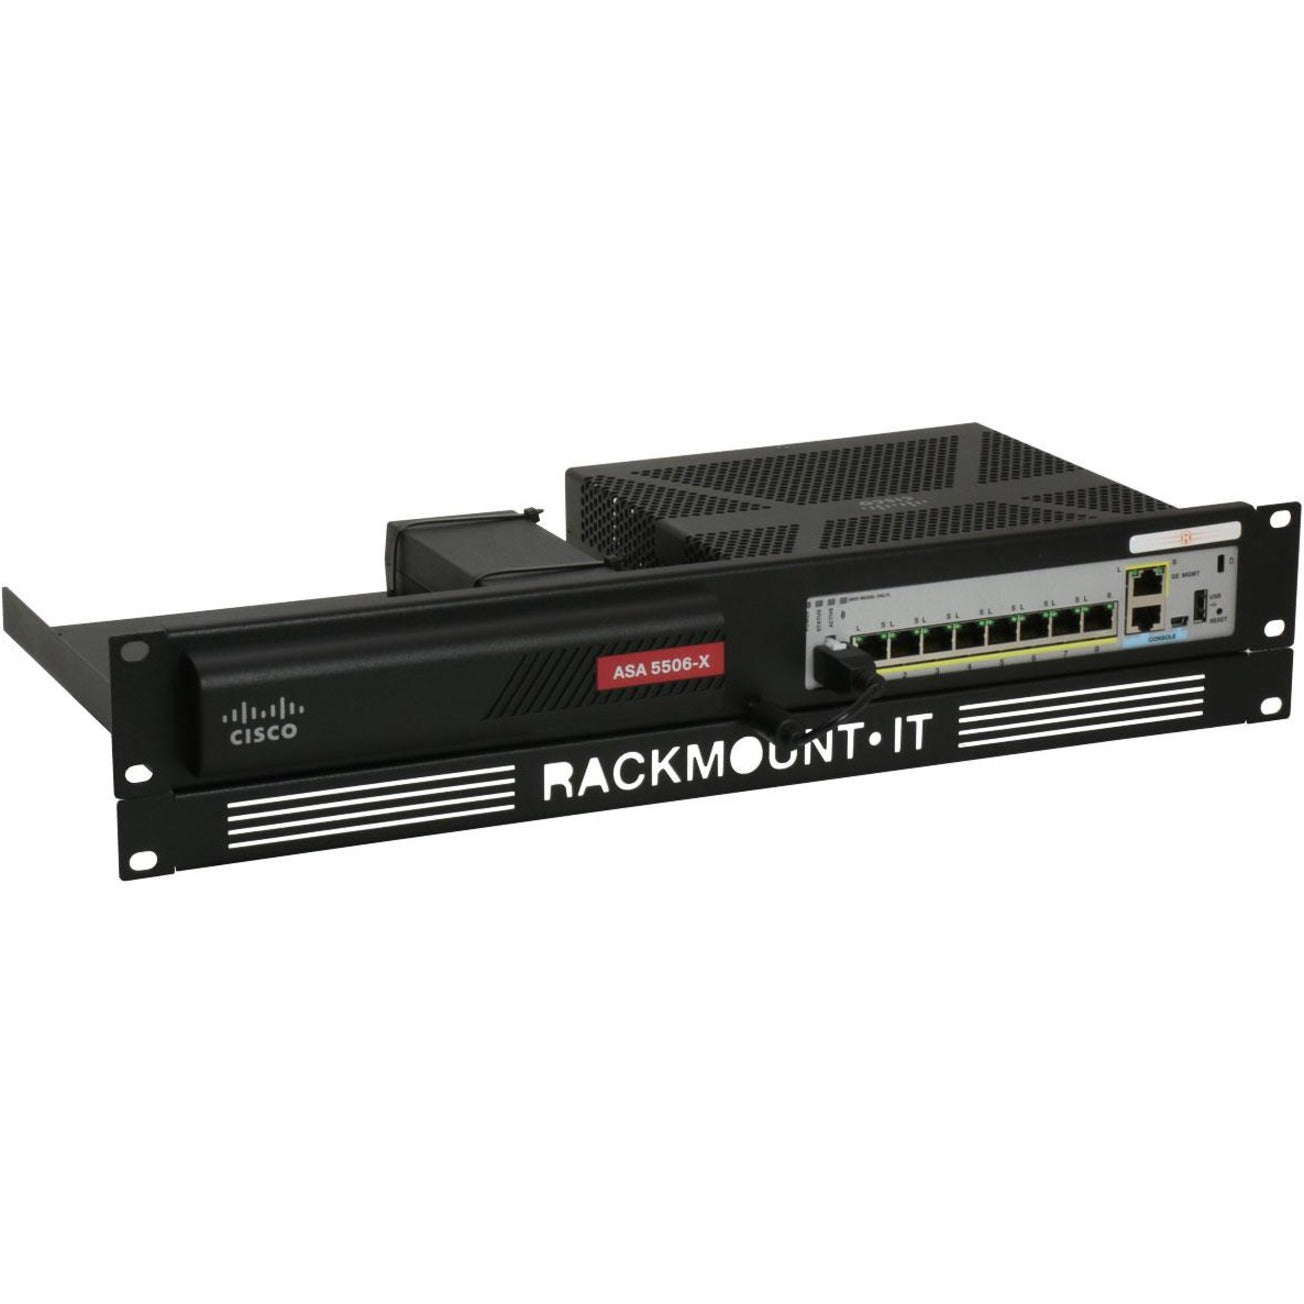 RACKMOUNT.IT RM-CI-T8 Cisrack Rack Mount, Compatible with Cisco ASA 5506-X and Firepower 1010